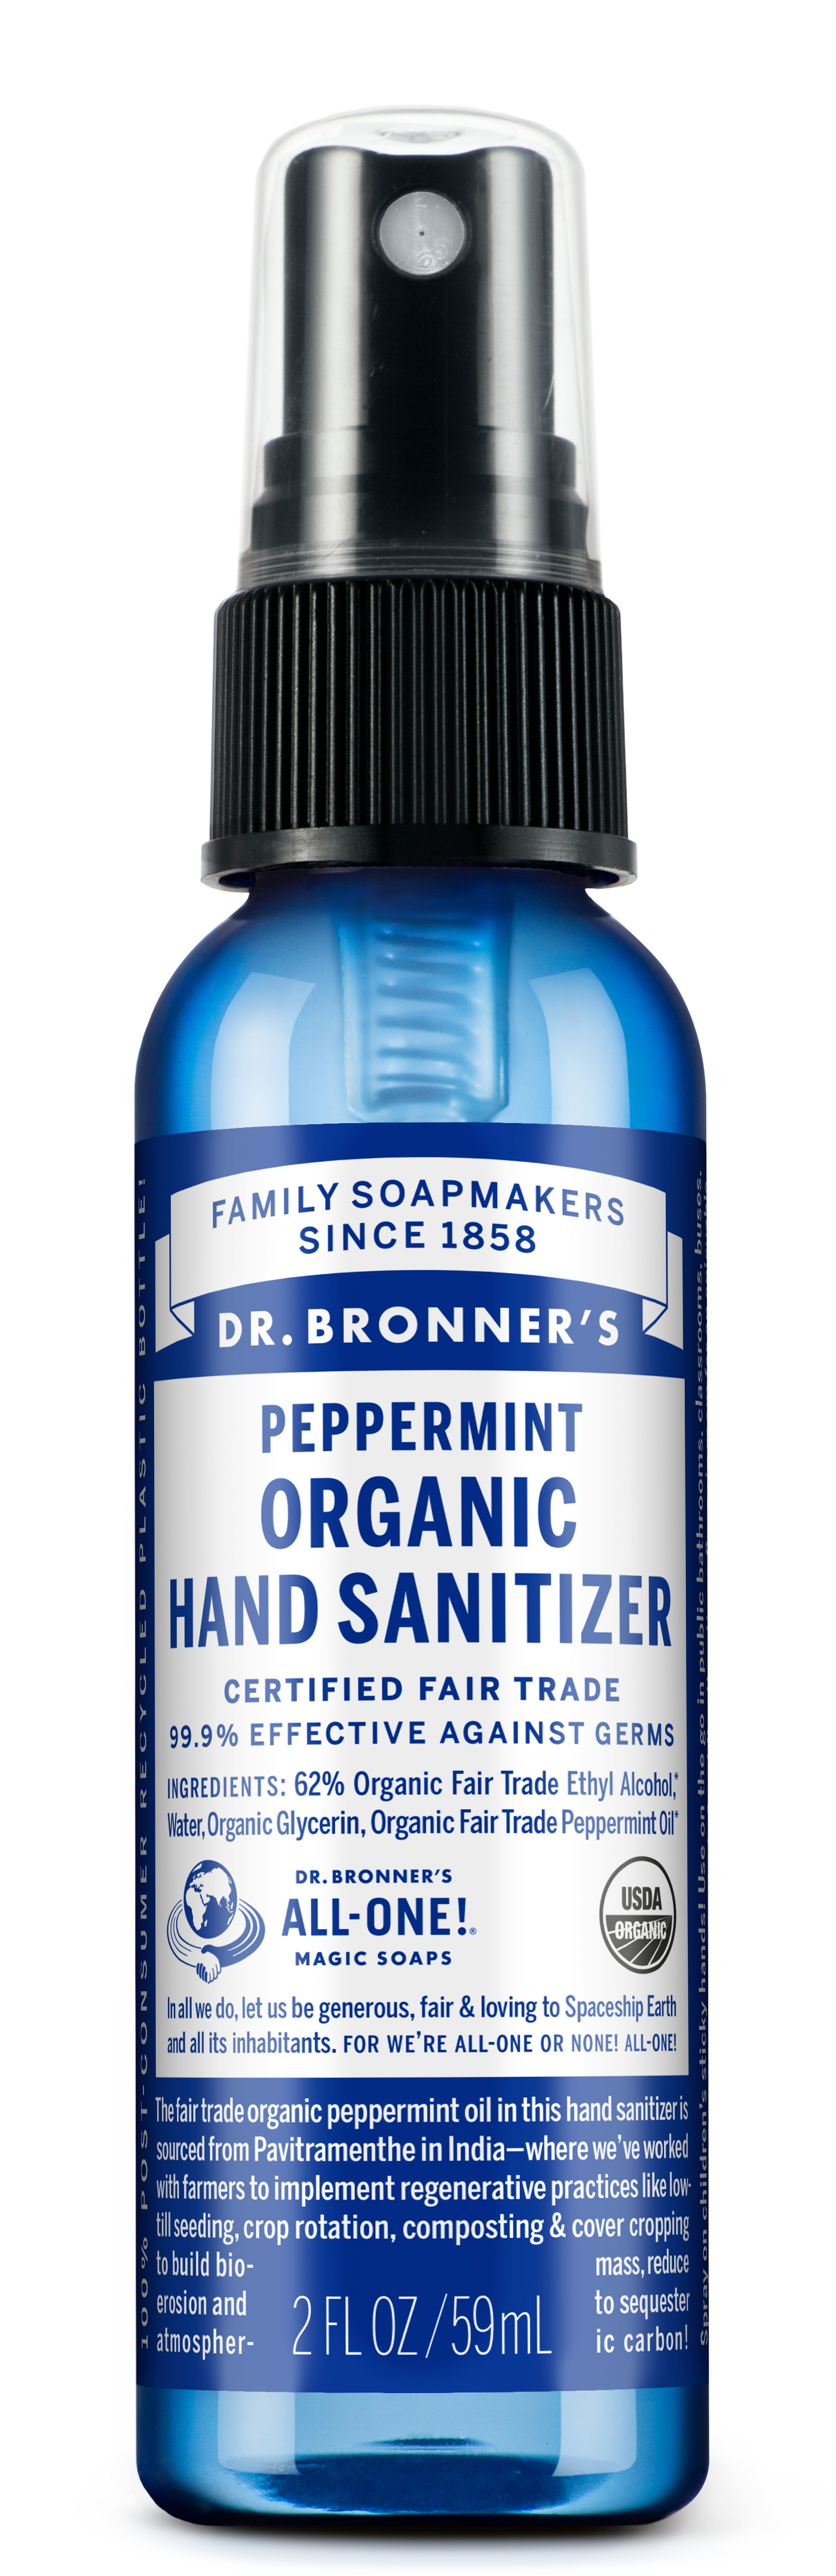 Dr. Bronner's Peppermint Organic Hand Sanitizer Spray 2oz - image 1 of 2